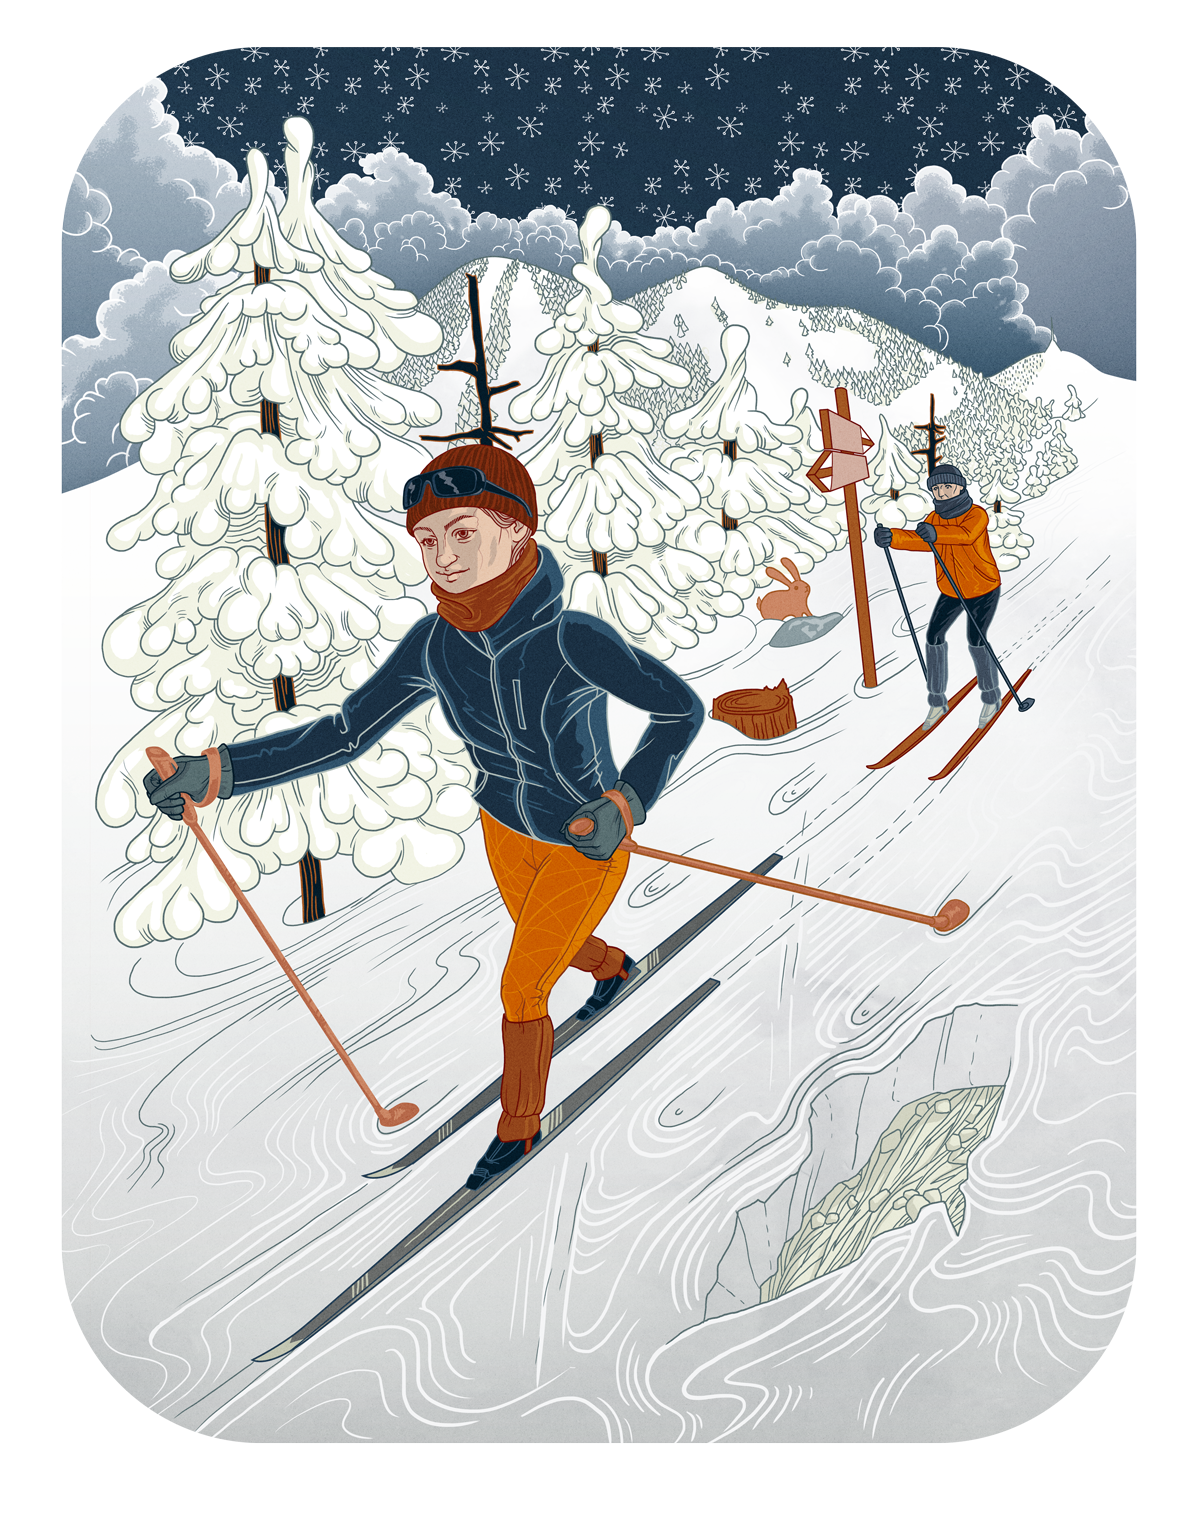 Adobe Portfolio,winter,crosscounty,lines,fills,trees,snow,skier,Ð˜Ð»Ð»ÑŽÑ�Ñ‚Ñ€Ð°Ñ†Ð¸Ñ�...